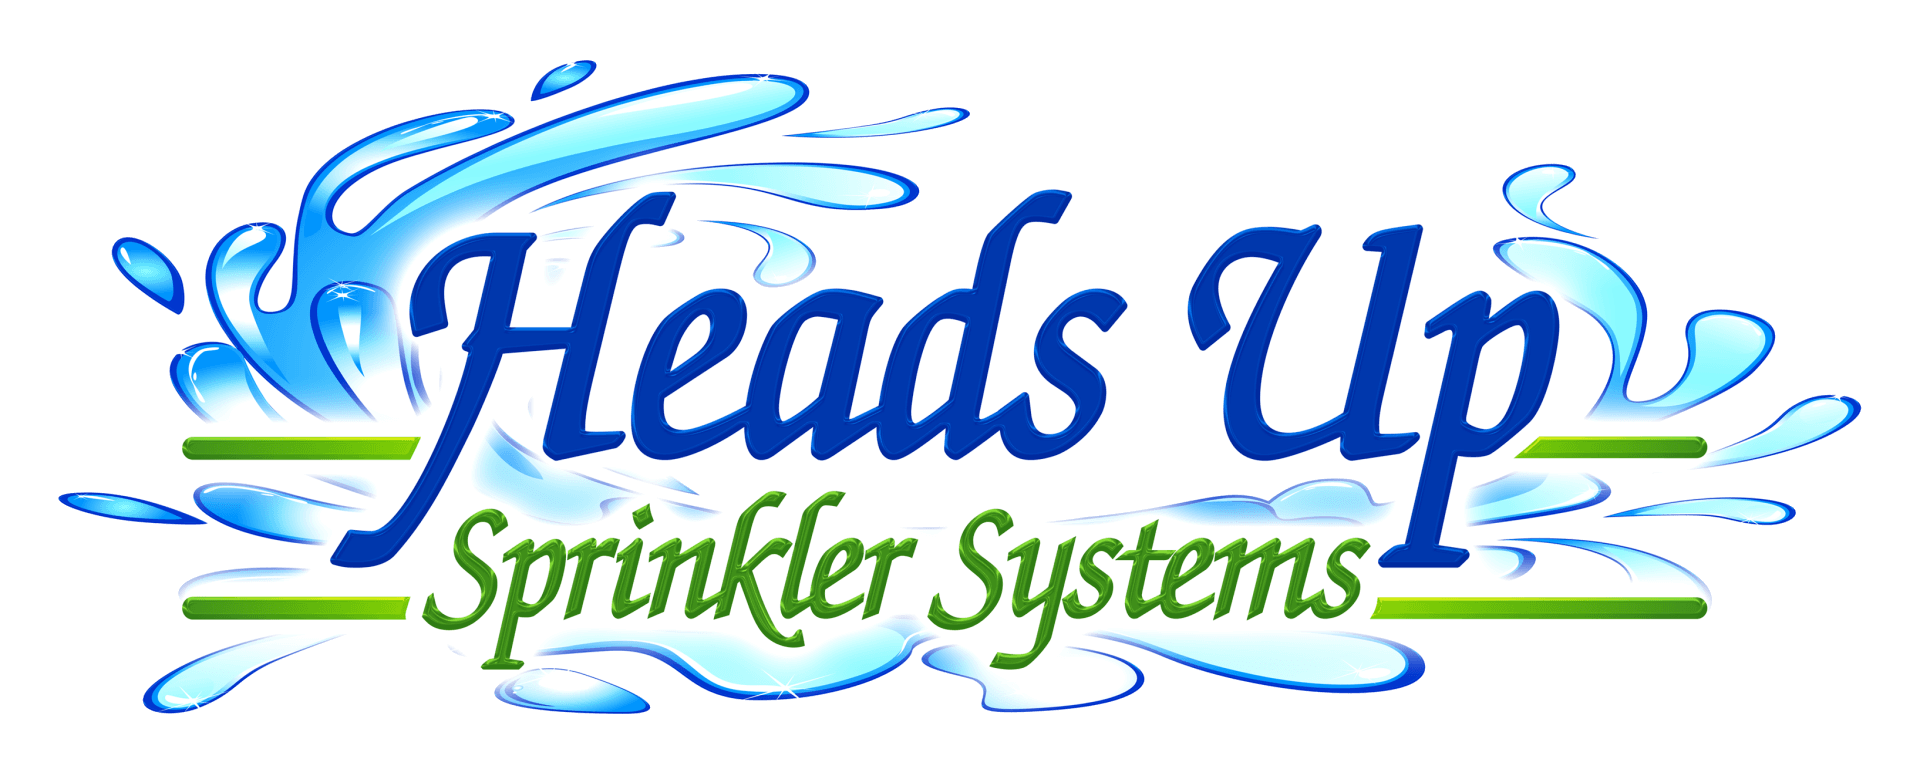 Heads Up Sprinkler Systems